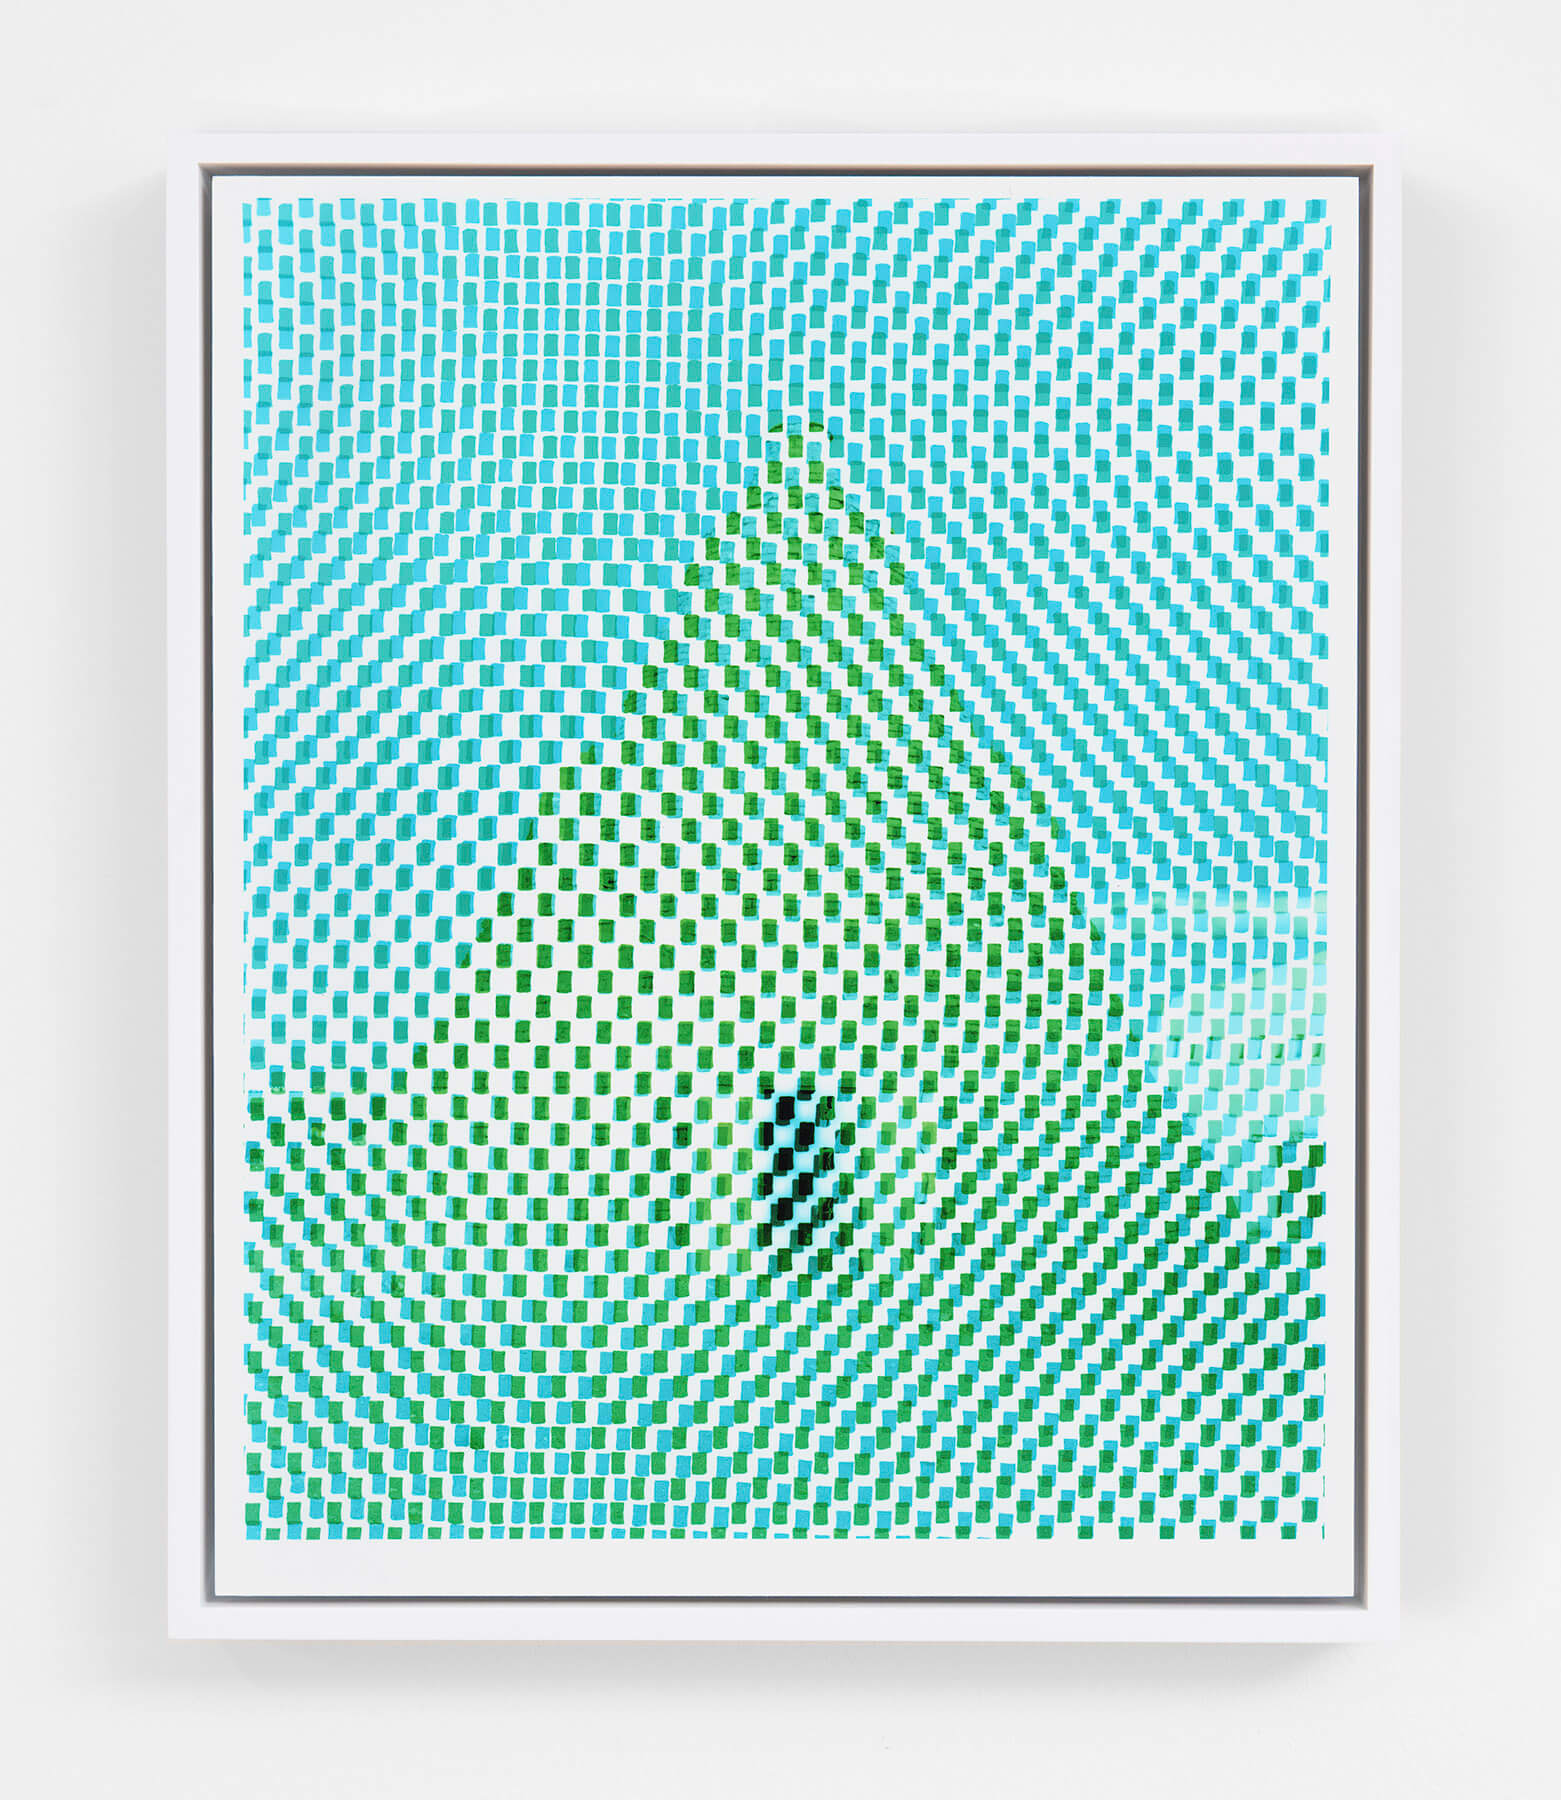 Livia Corona Benjamin
                                        'Infinite Rewrite XV', 2015
                                        10 1/2 x 8 1/2 Inches
                                        unique analog C-print
                                        